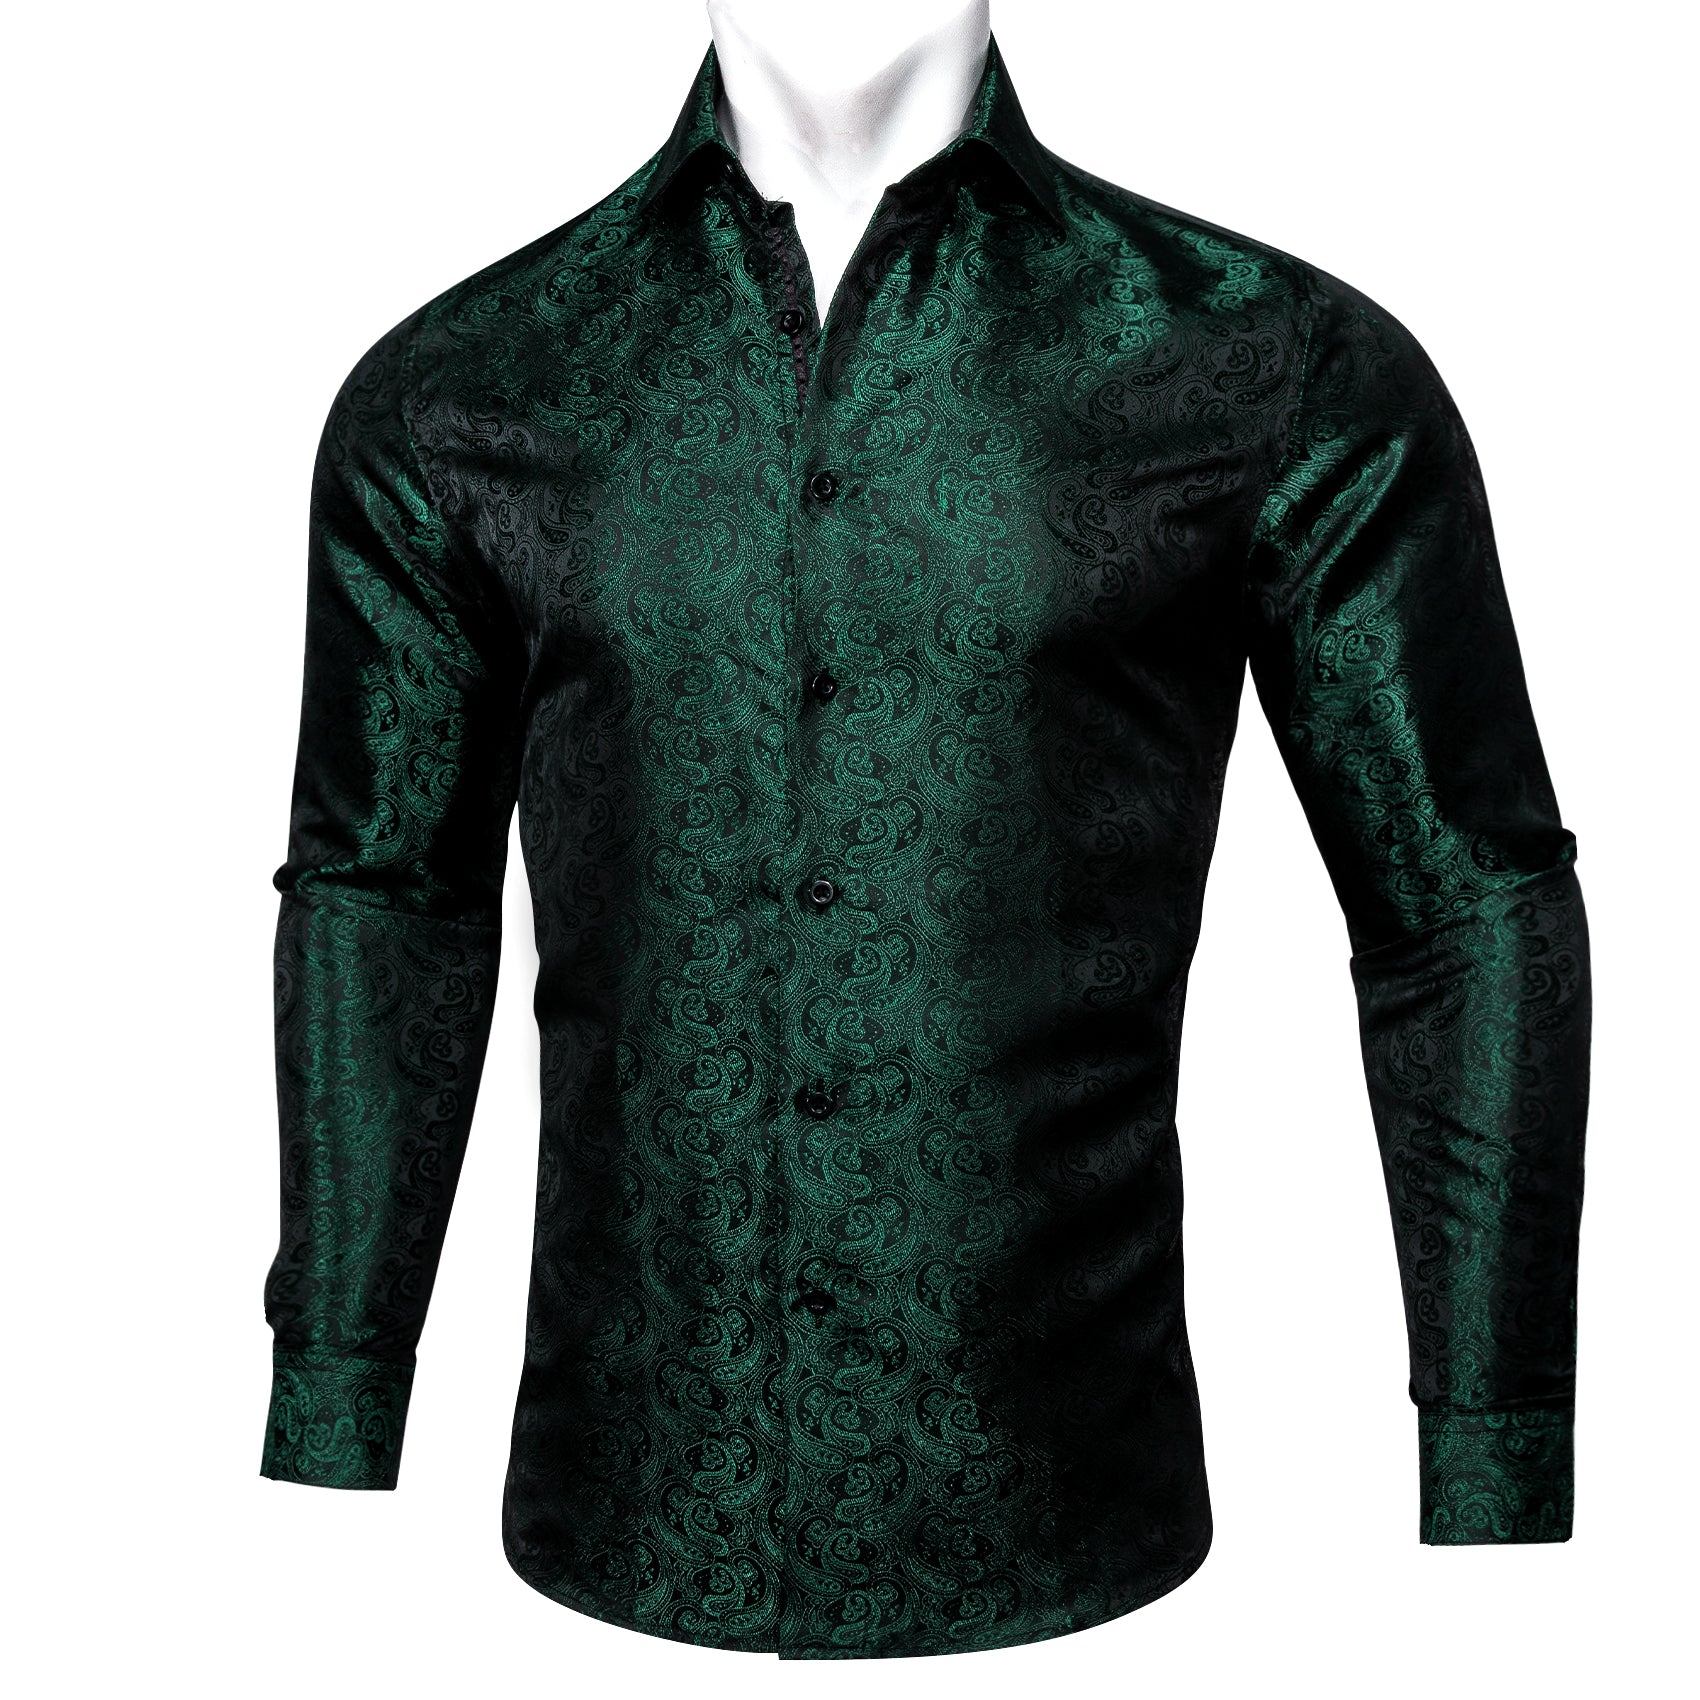 Barry.wang Button Down Shirt Green Paisley Men's Silk Shirt Top